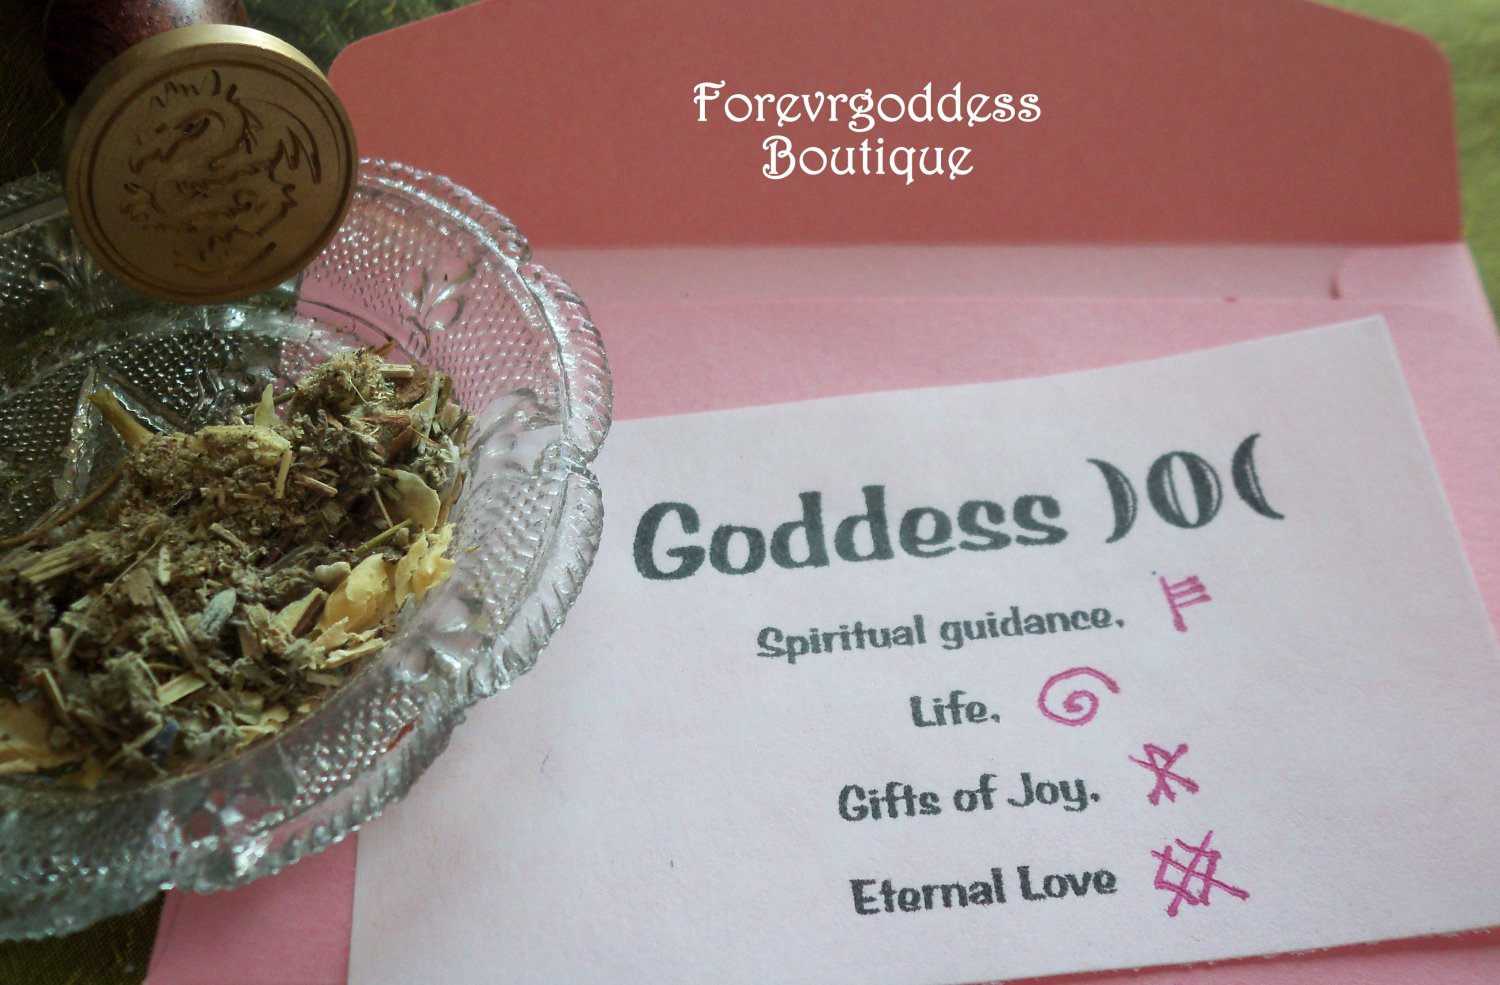 Enchanted offerings: Goddess